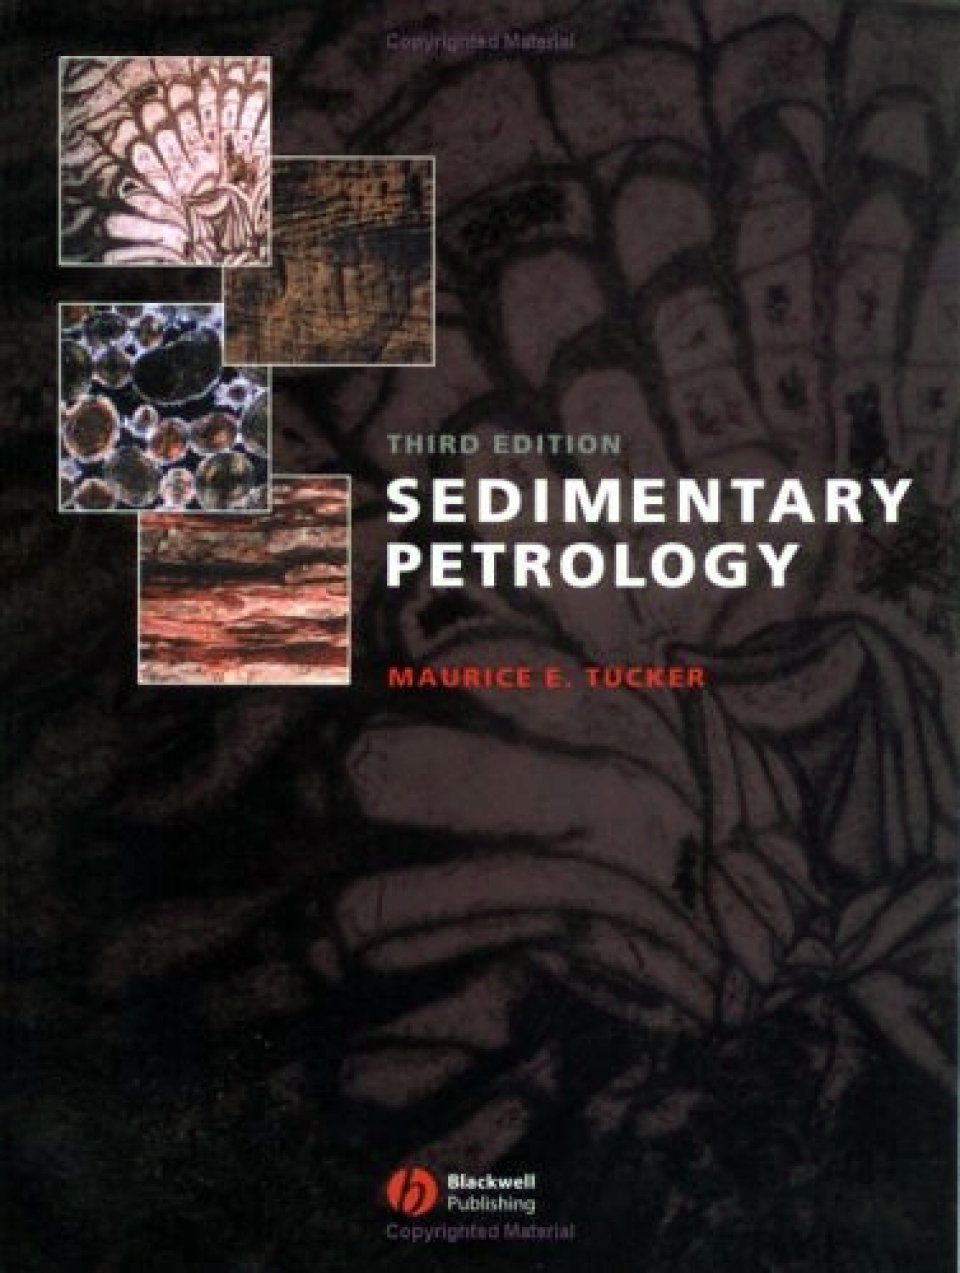 Sedimentary petrology